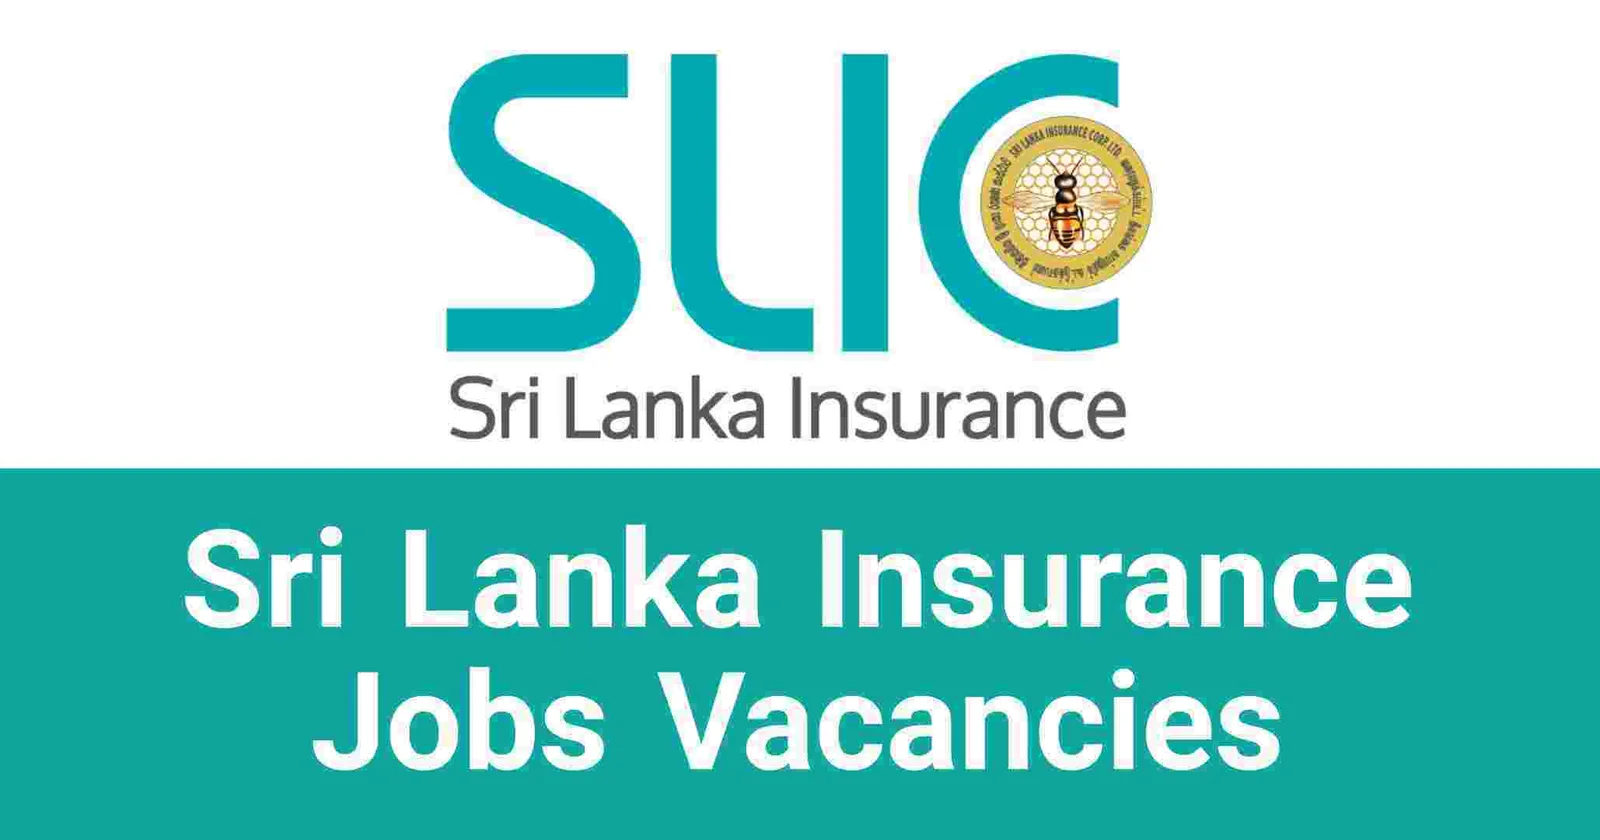 Sri Lanka Insurance Jobs Vacancies